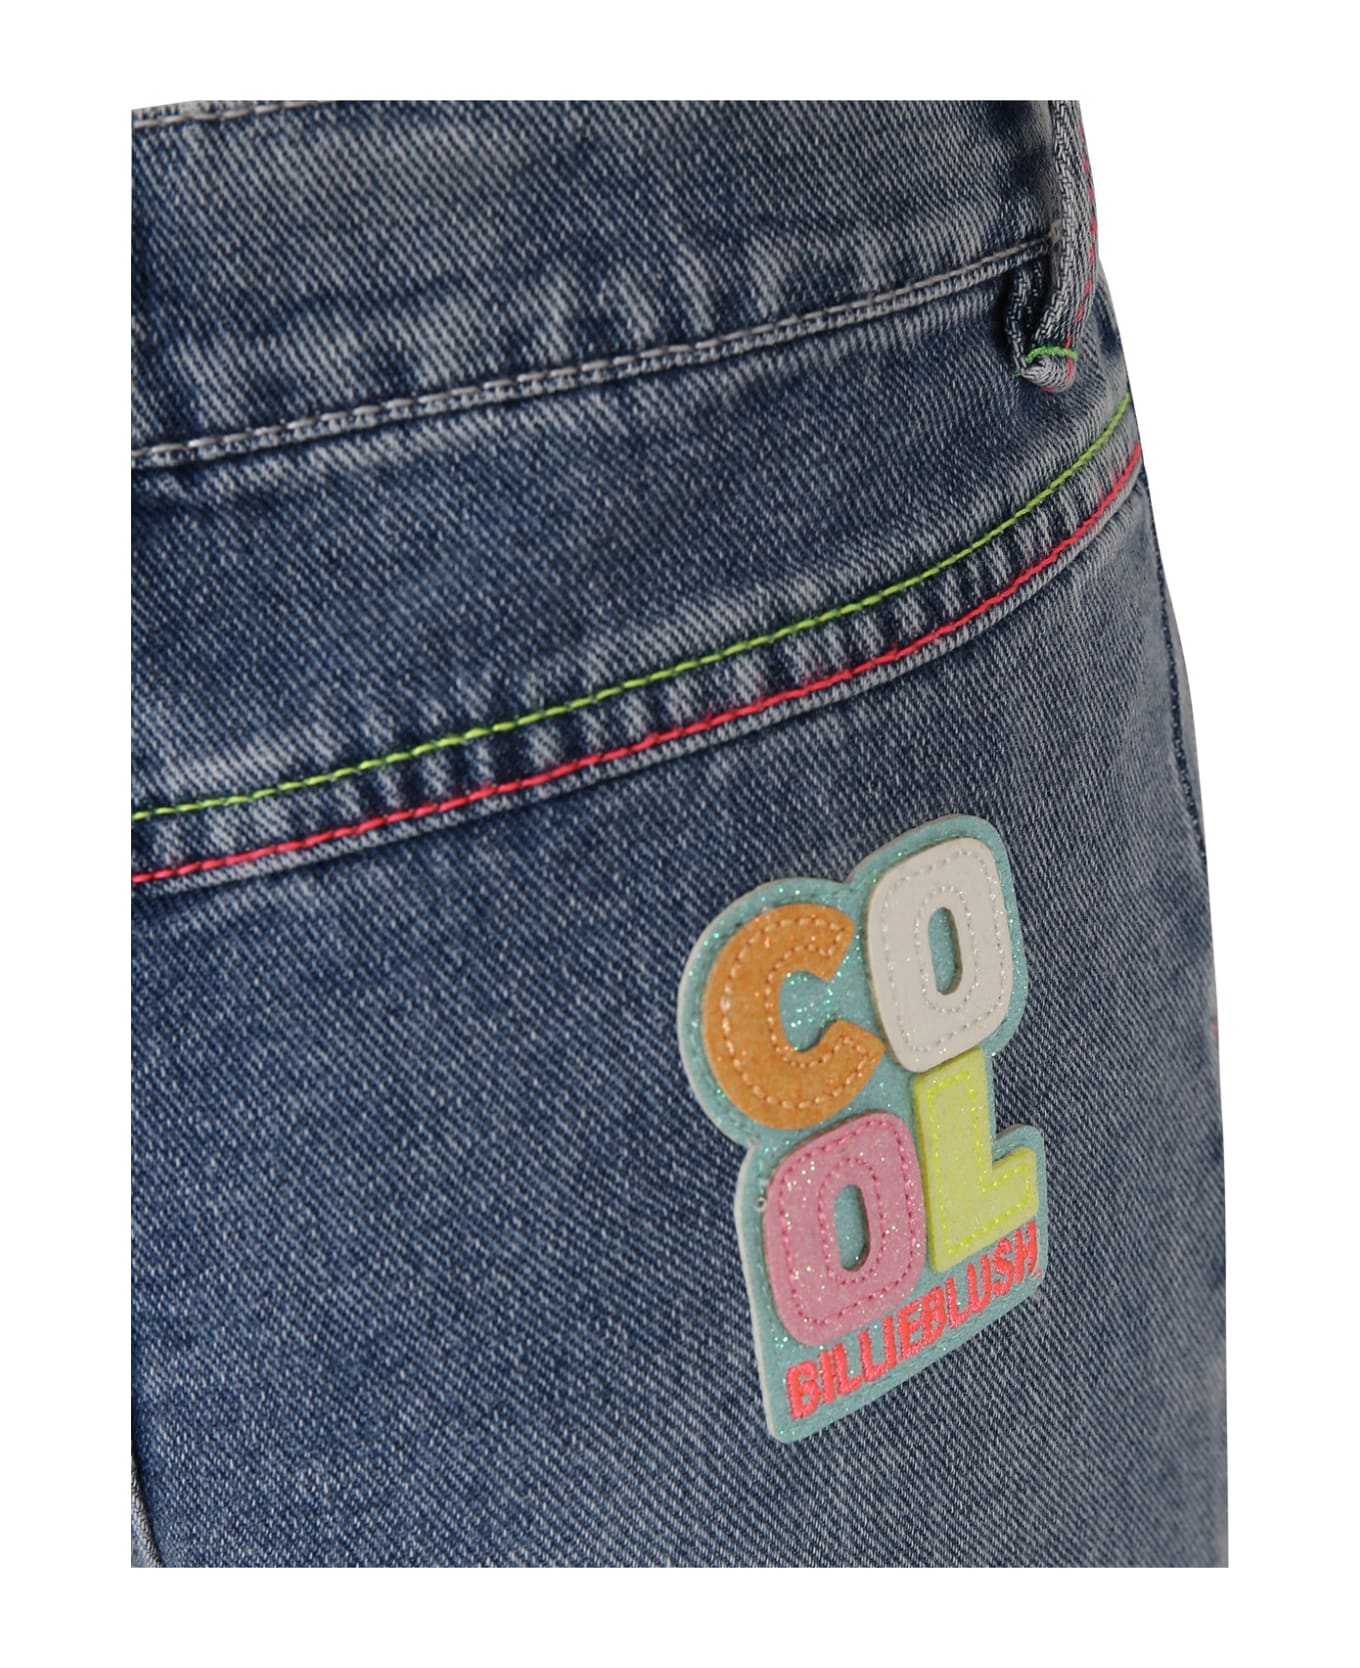 Billieblush Denim Jeans For Girl With Logo - Denim ボトムス